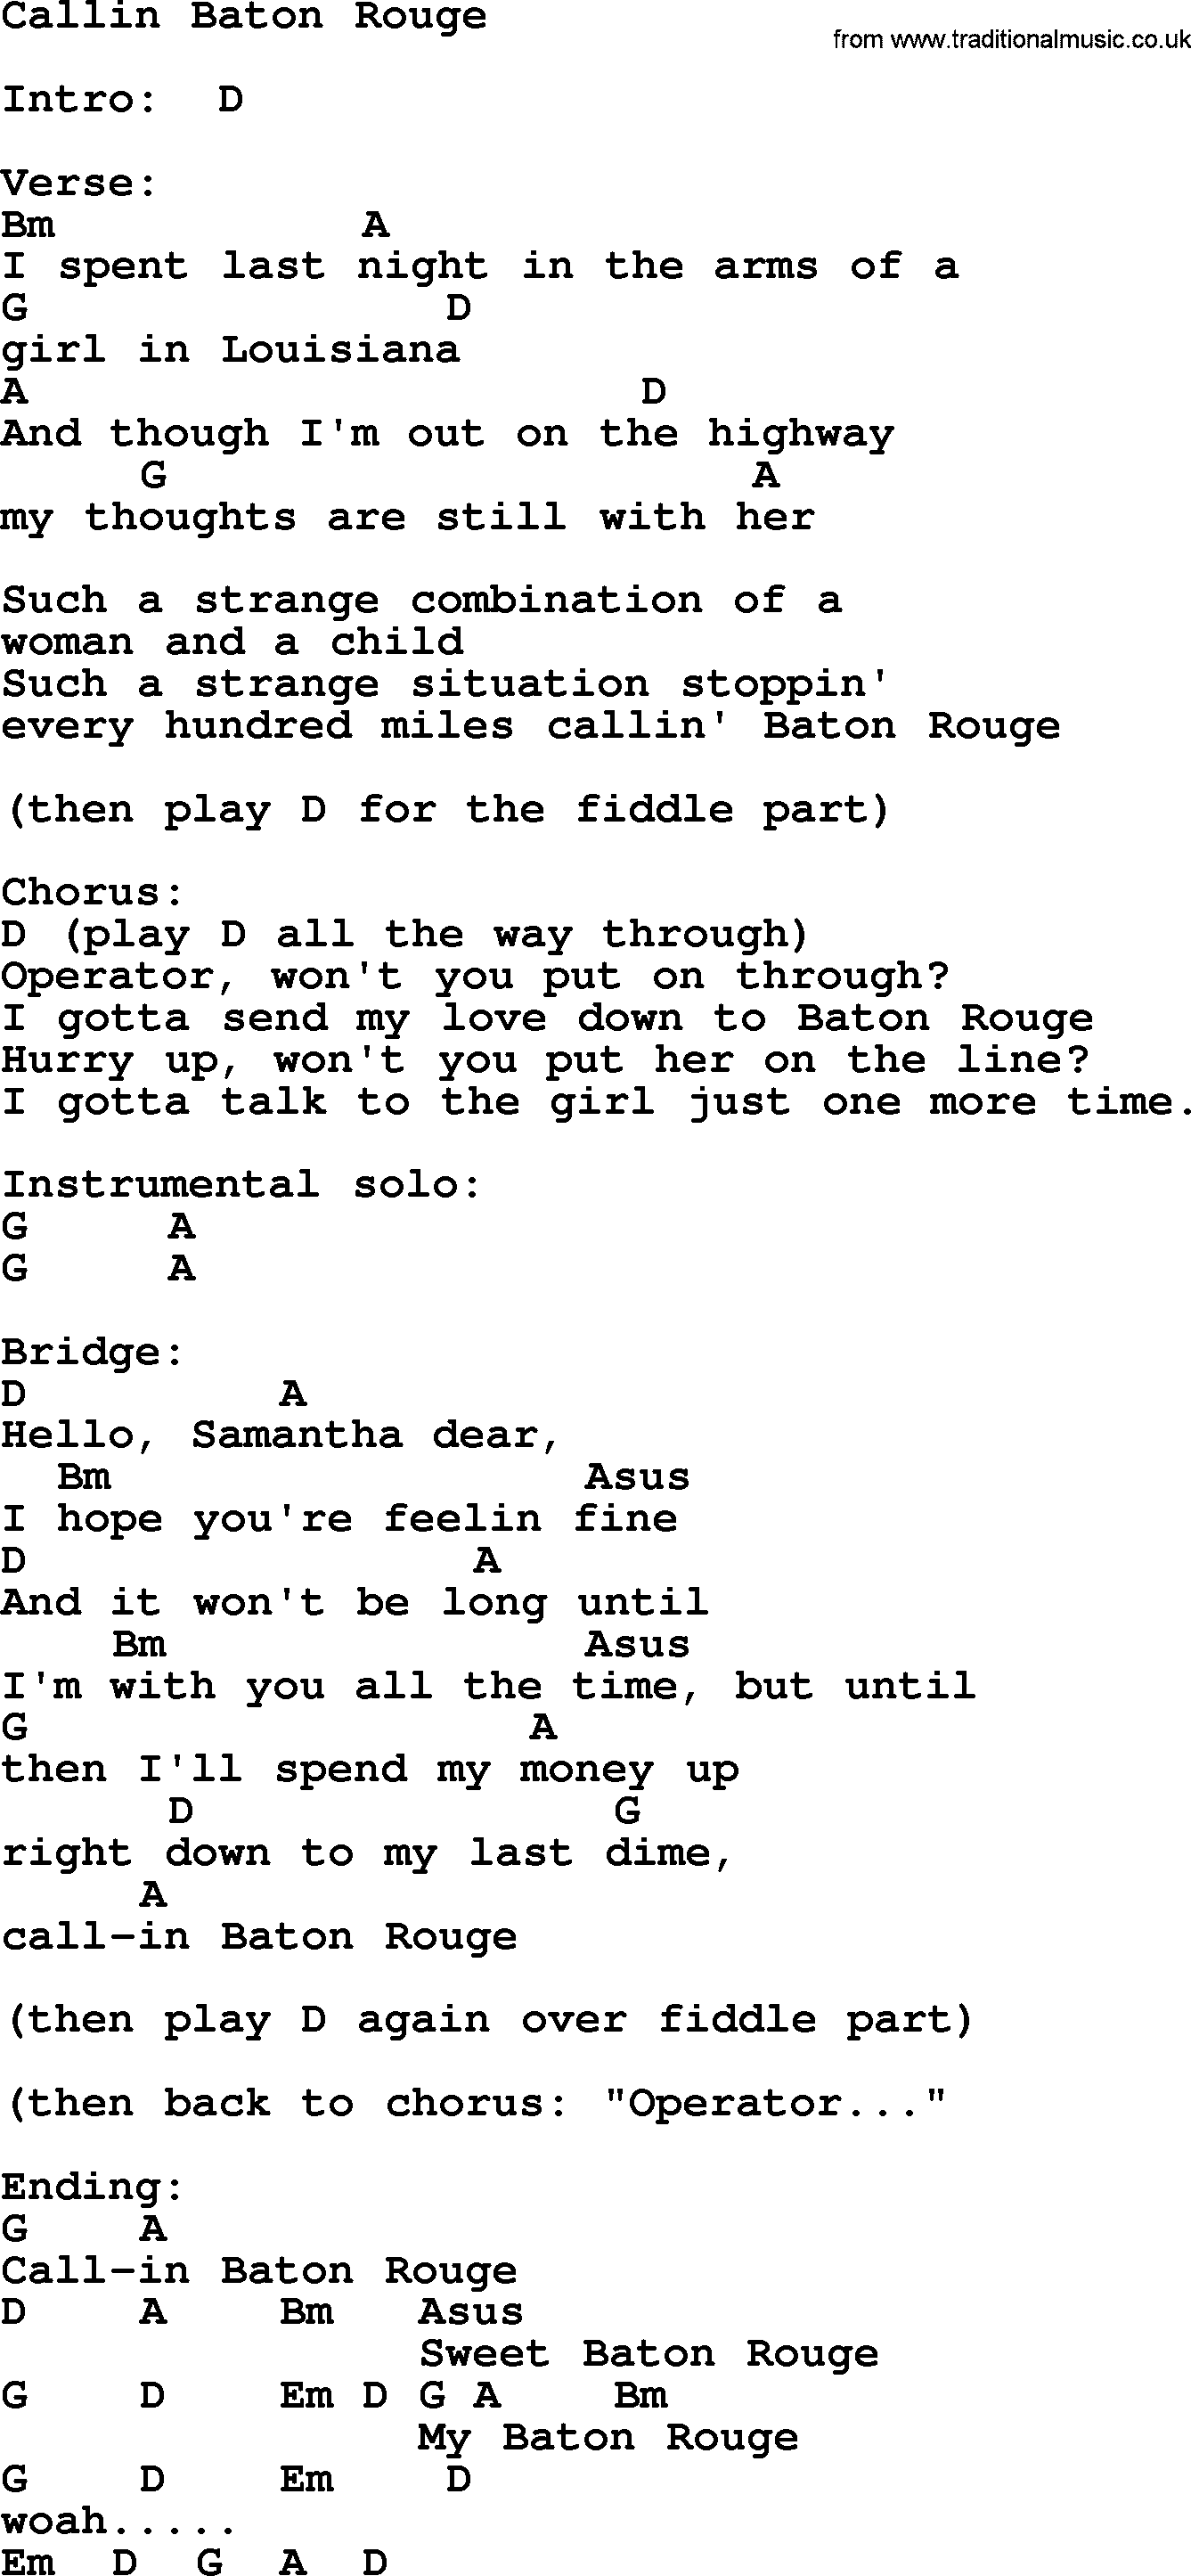 Garth Brooks song: Callin Baton Rouge, lyrics and chords